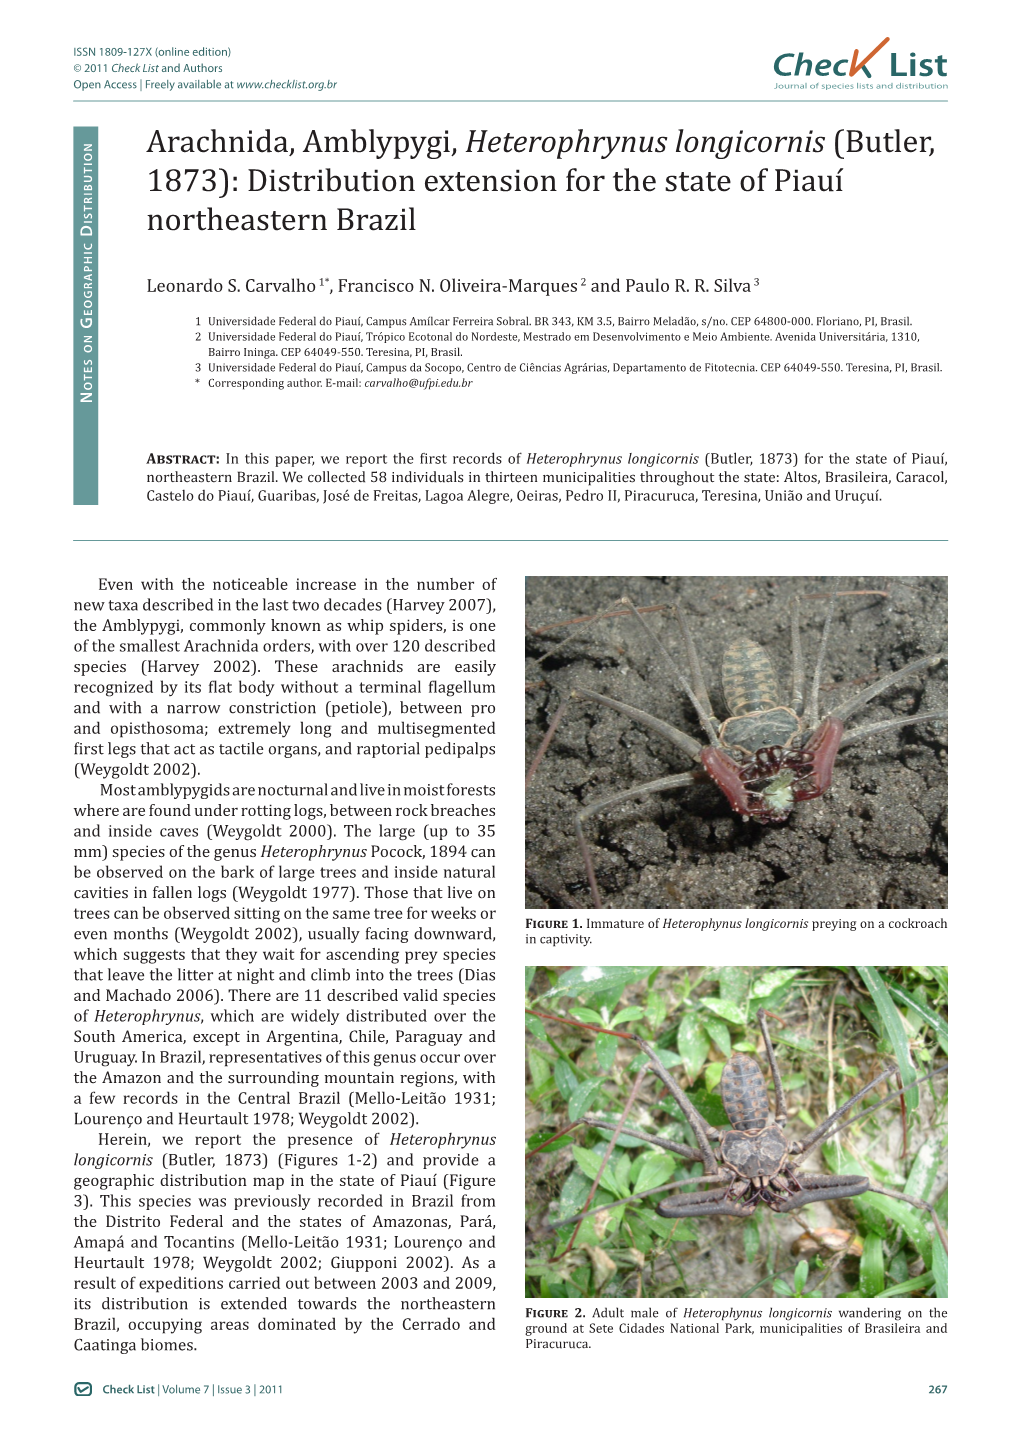 Arachnida, Amblypygi, Heterophrynus Longicornis (Butler, 1873): Distribution Extension for the State of Piauí